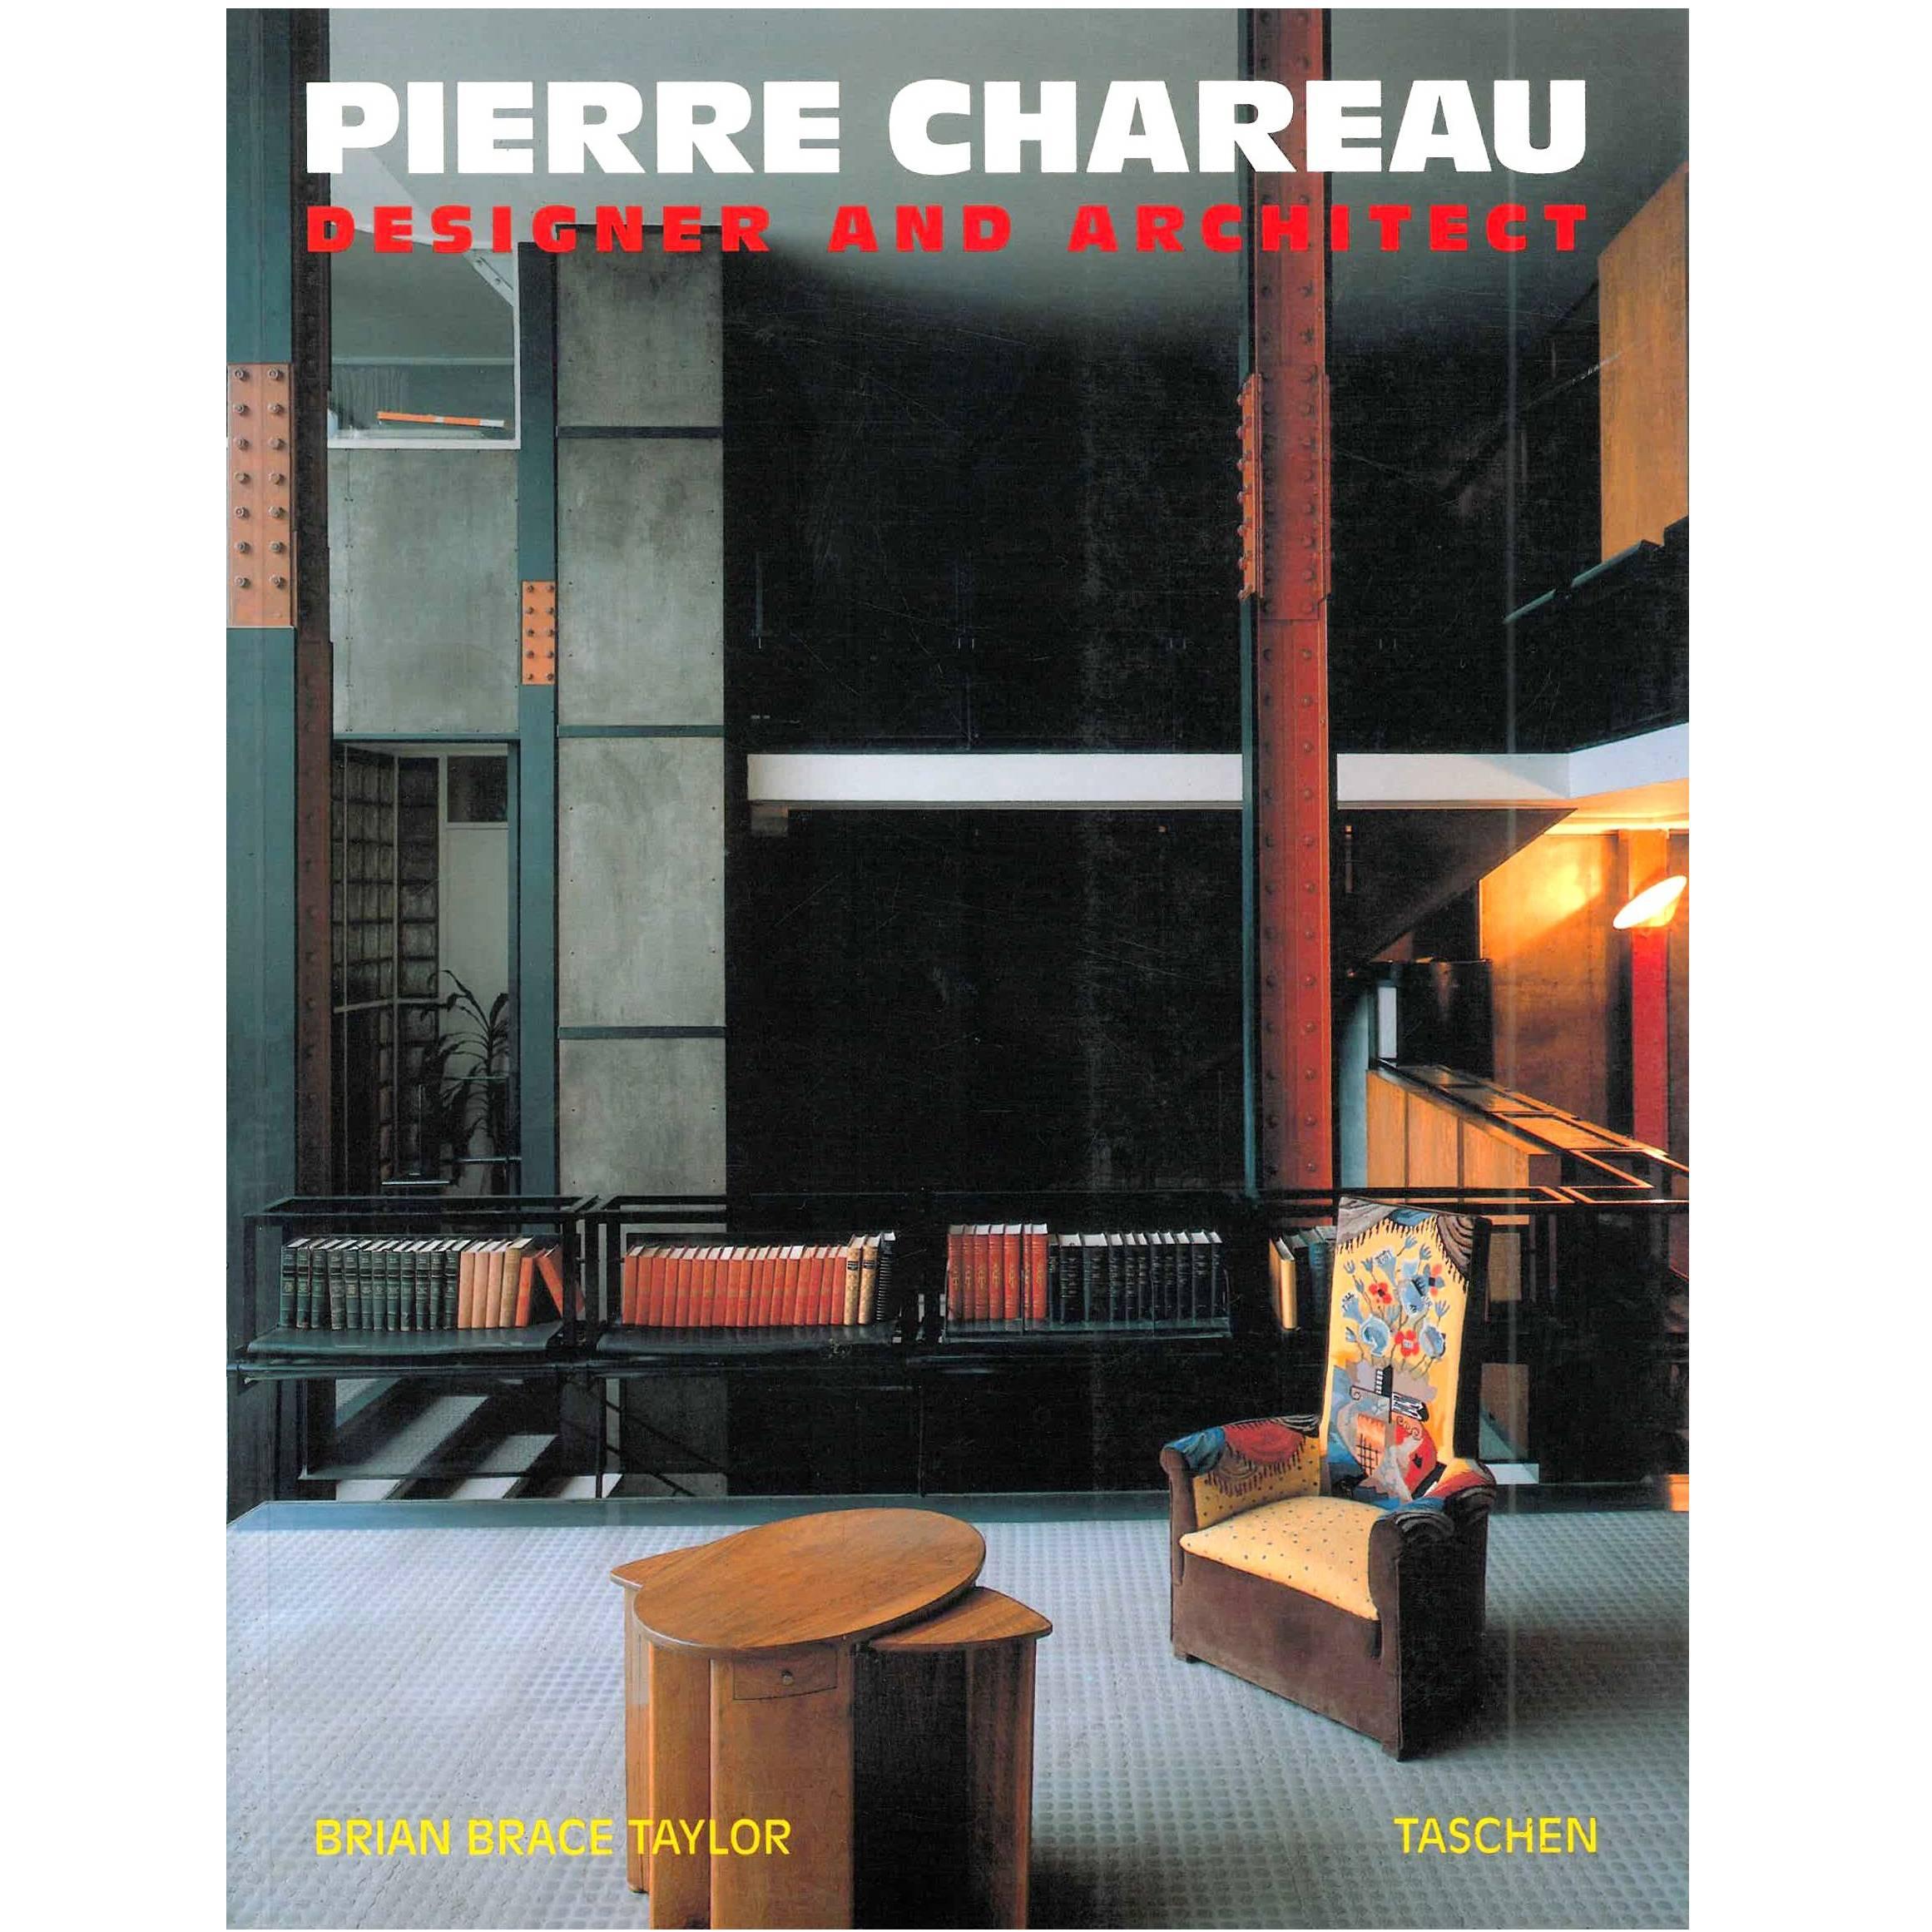 "PIERRE CHAREAU - Designer and Architect" Book